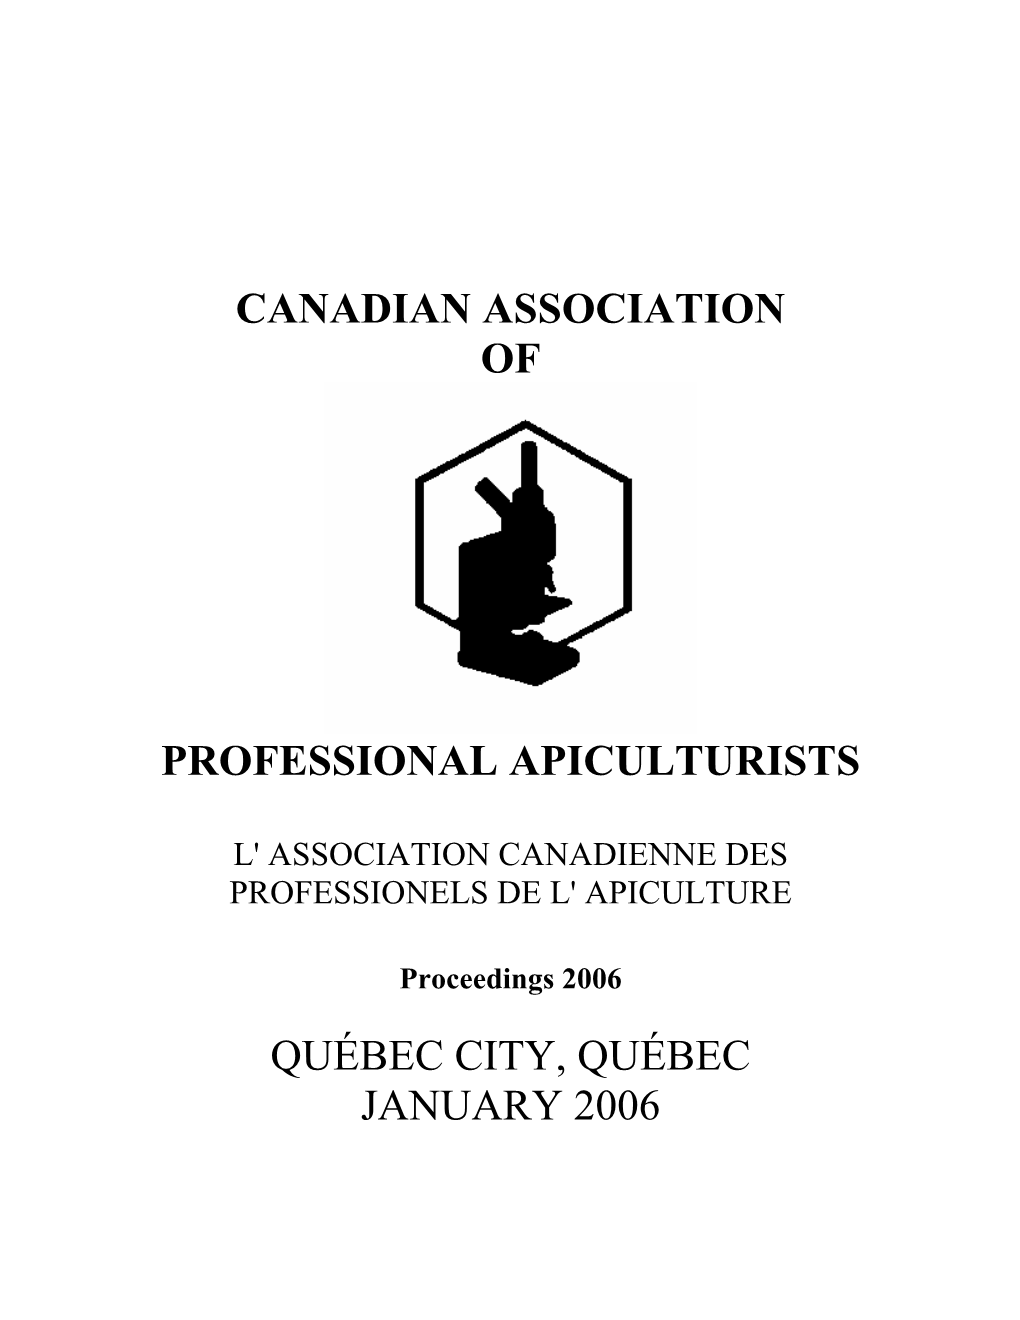 Canadian Association of Professional Apiculturists Annual Meeting Québec City, Québec January 25, 2006